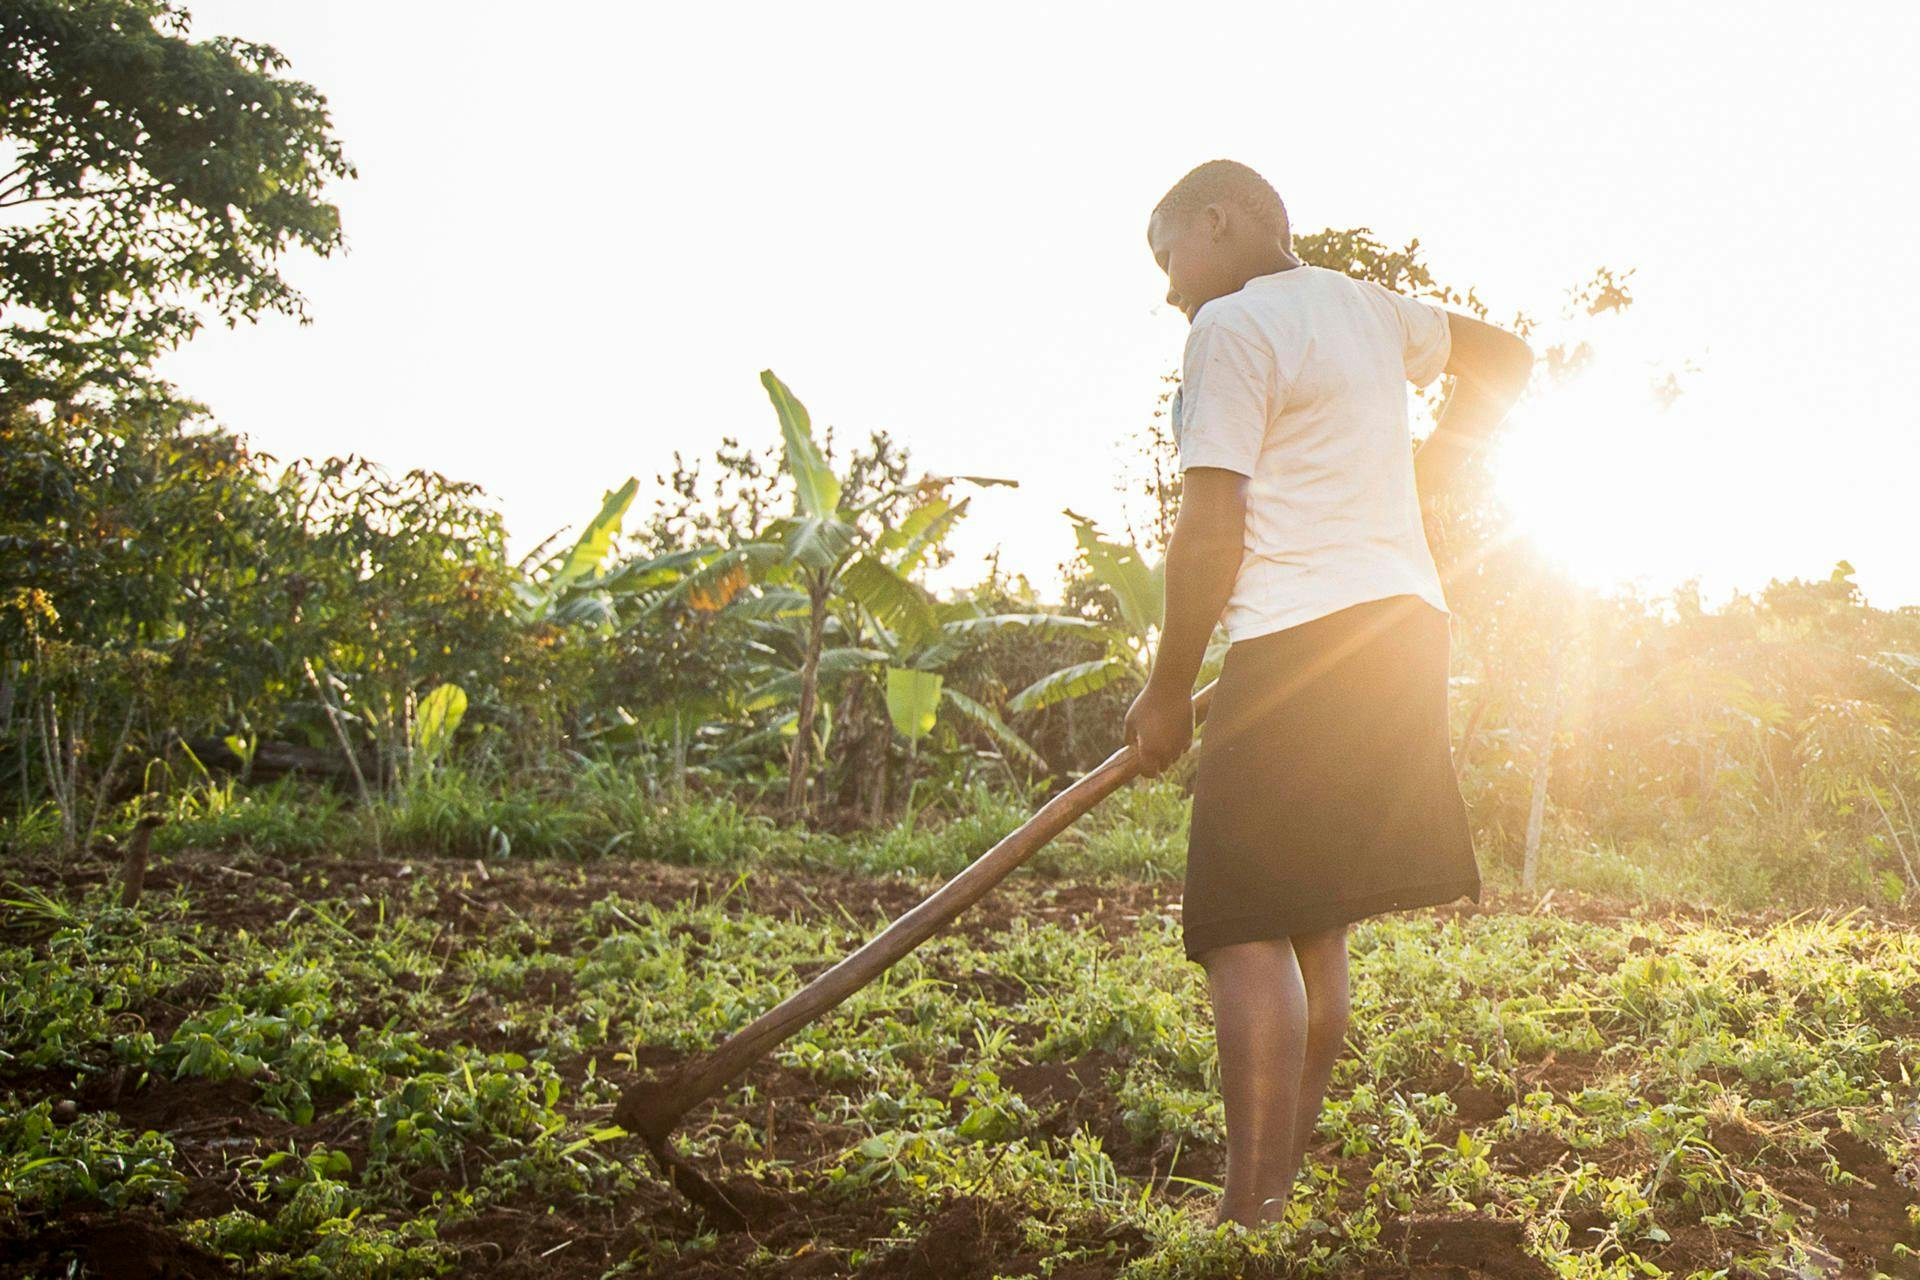 Young Ugandan wins entrepreneurship award for her organic fertilizer